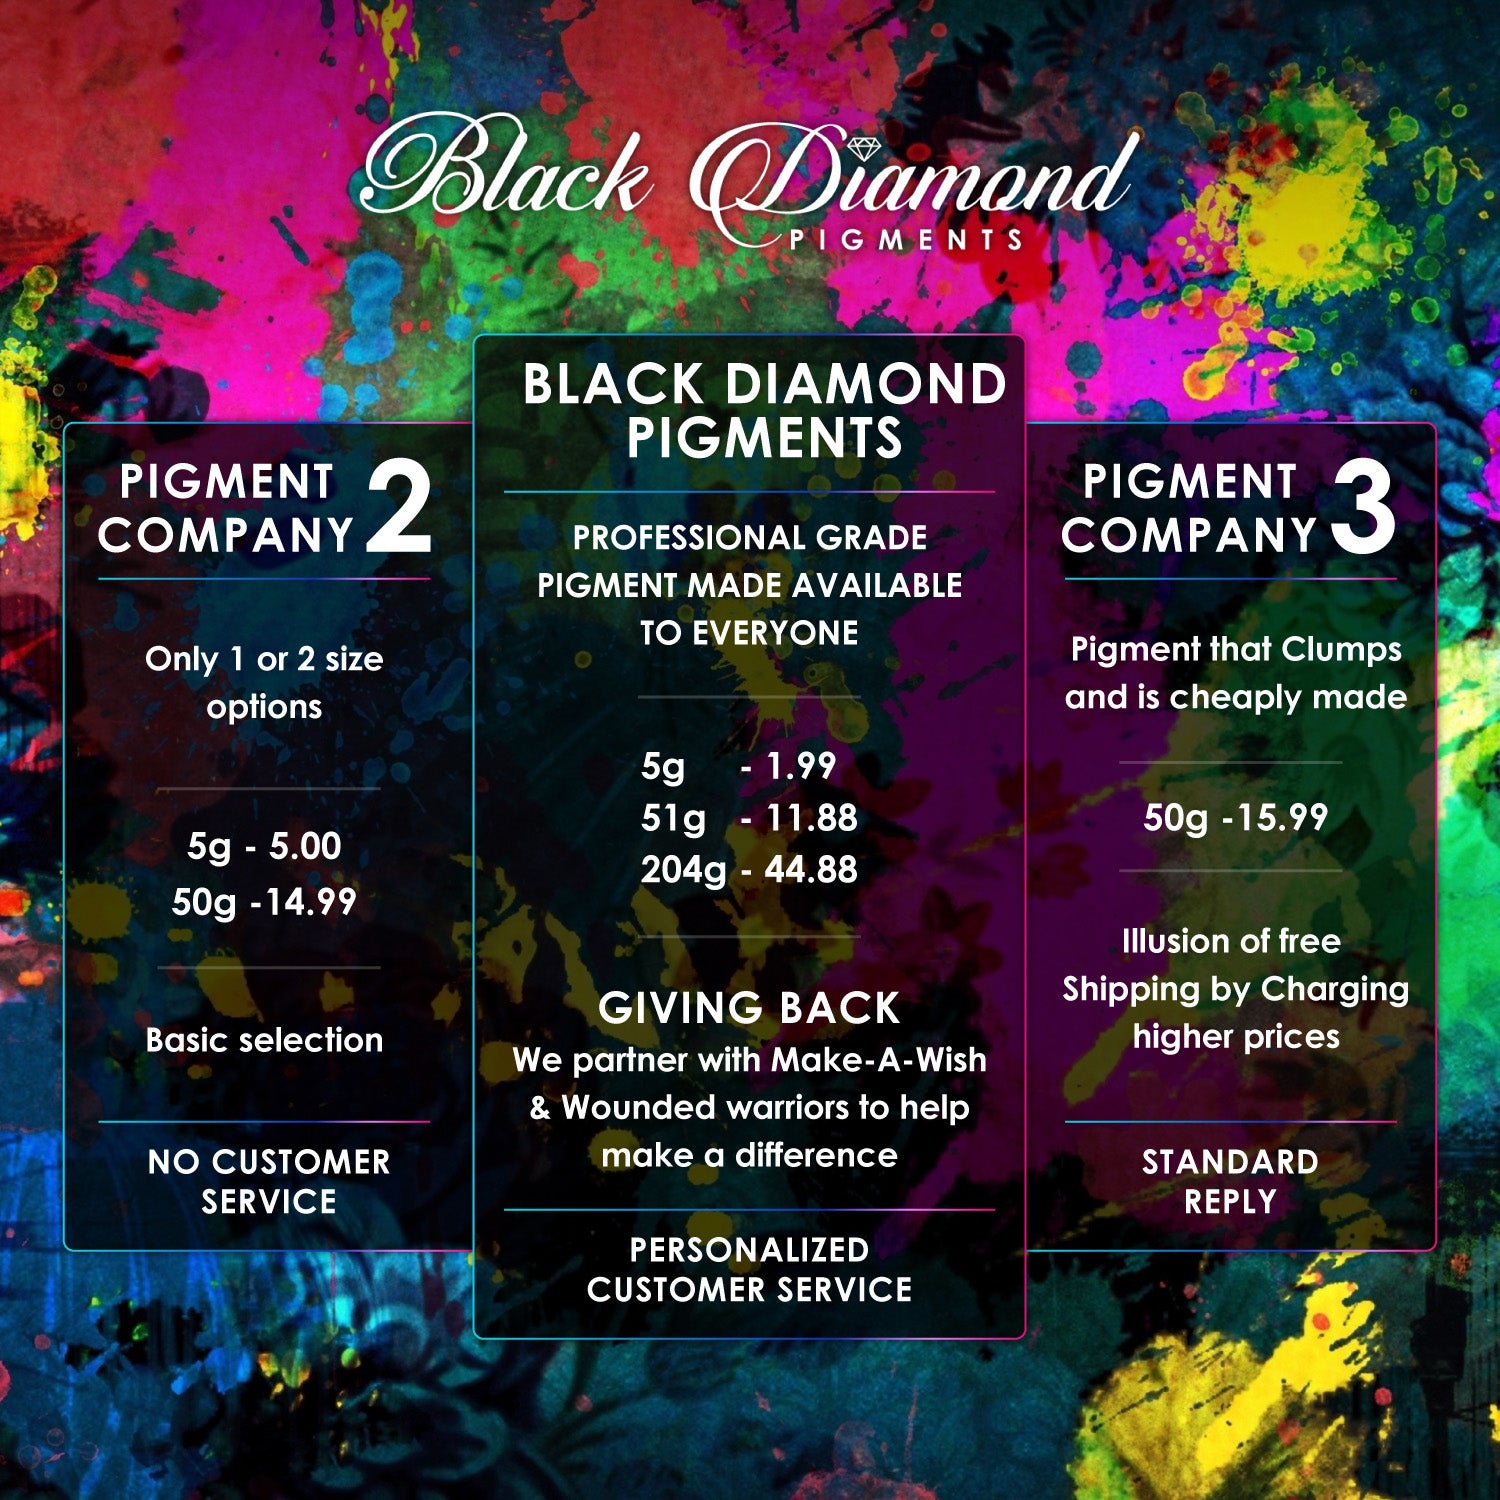 42g "KIWI" - Make-A-Wish Black Diamond Pigments